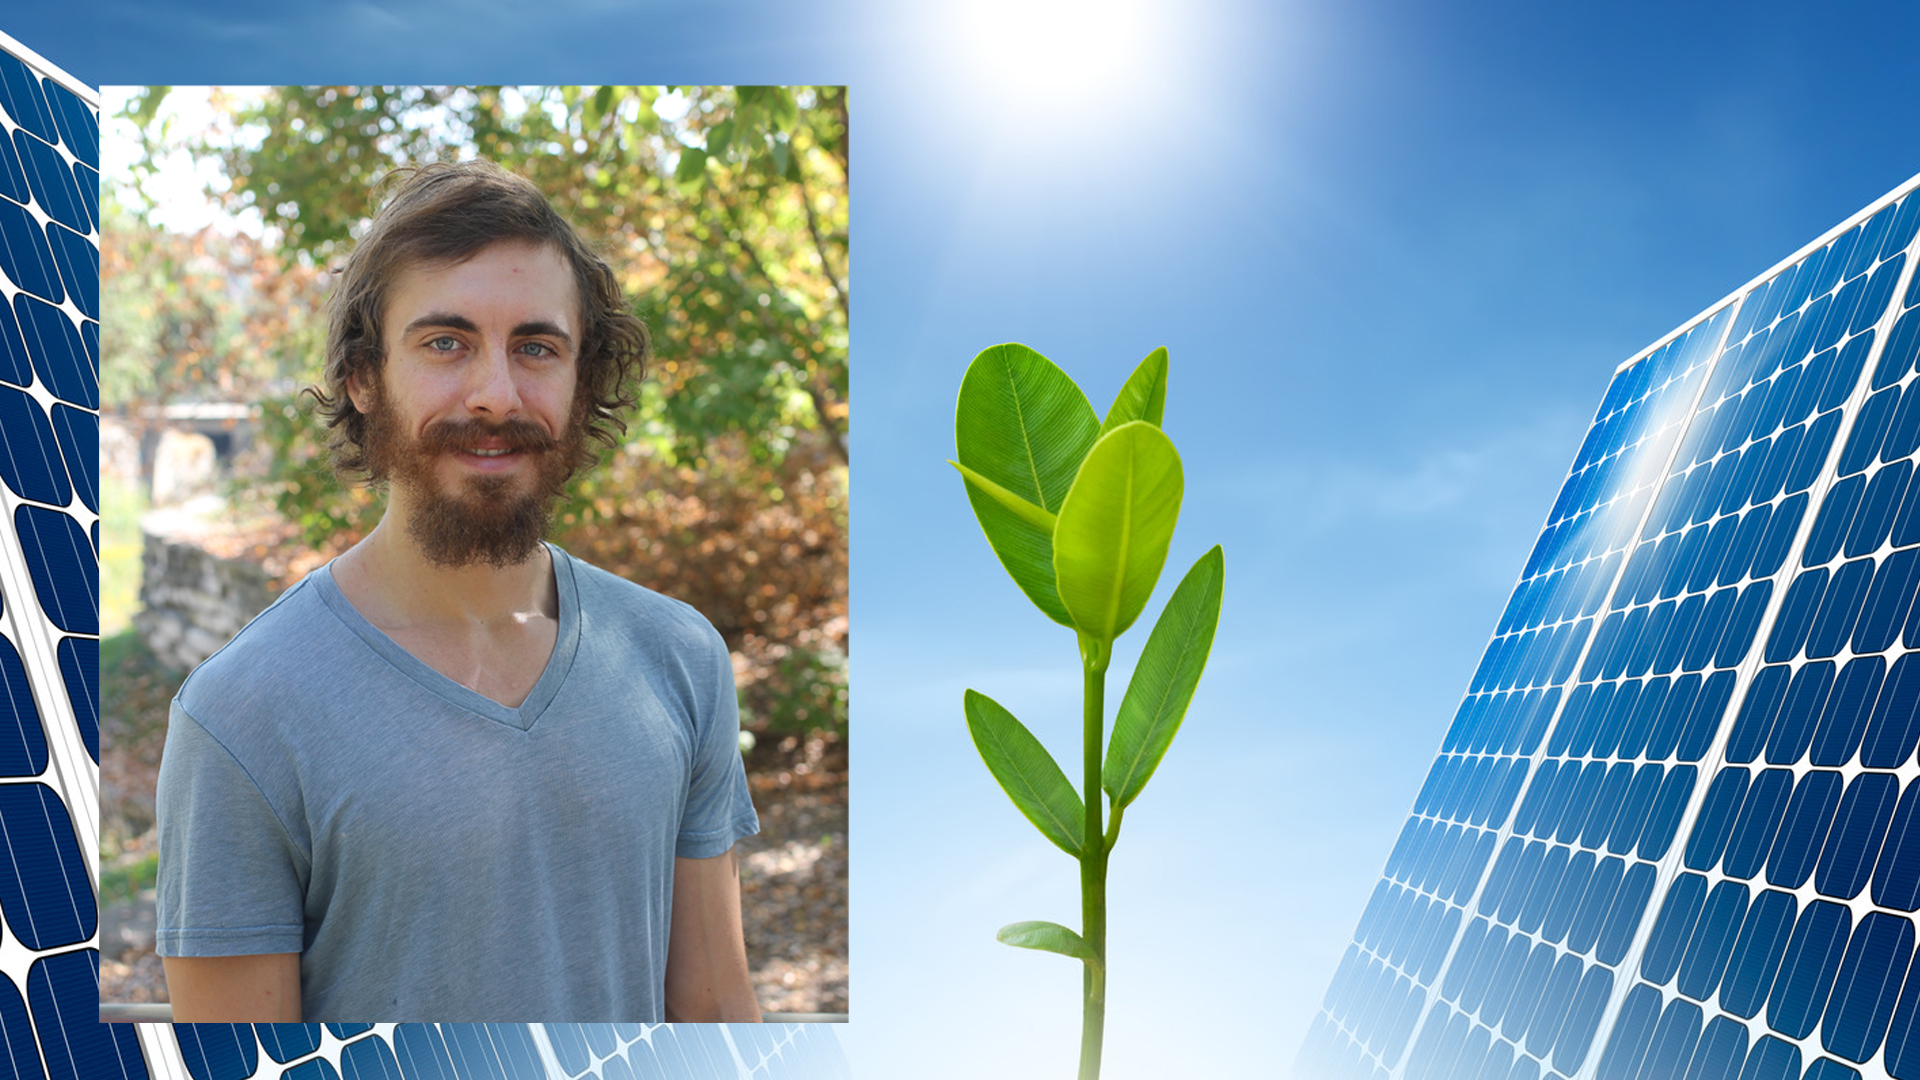 2017 Taber Scholar looks to solar, bioenergy for career